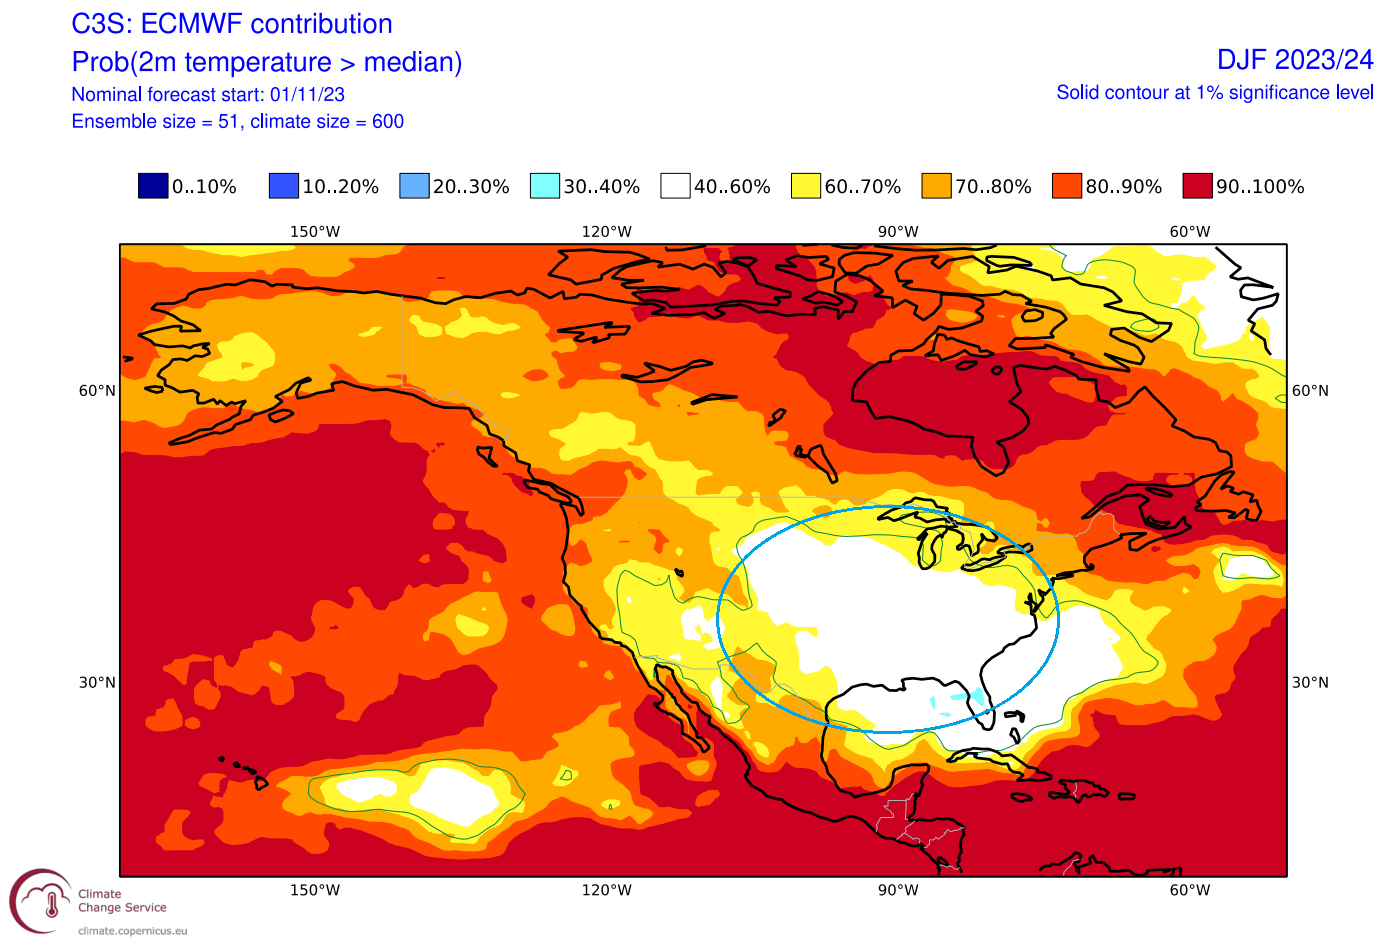 winter-2023-2024-weather-forecast-ecmwf-temperature-anomaly-united-states-pattern-el-nino-impact-new-data